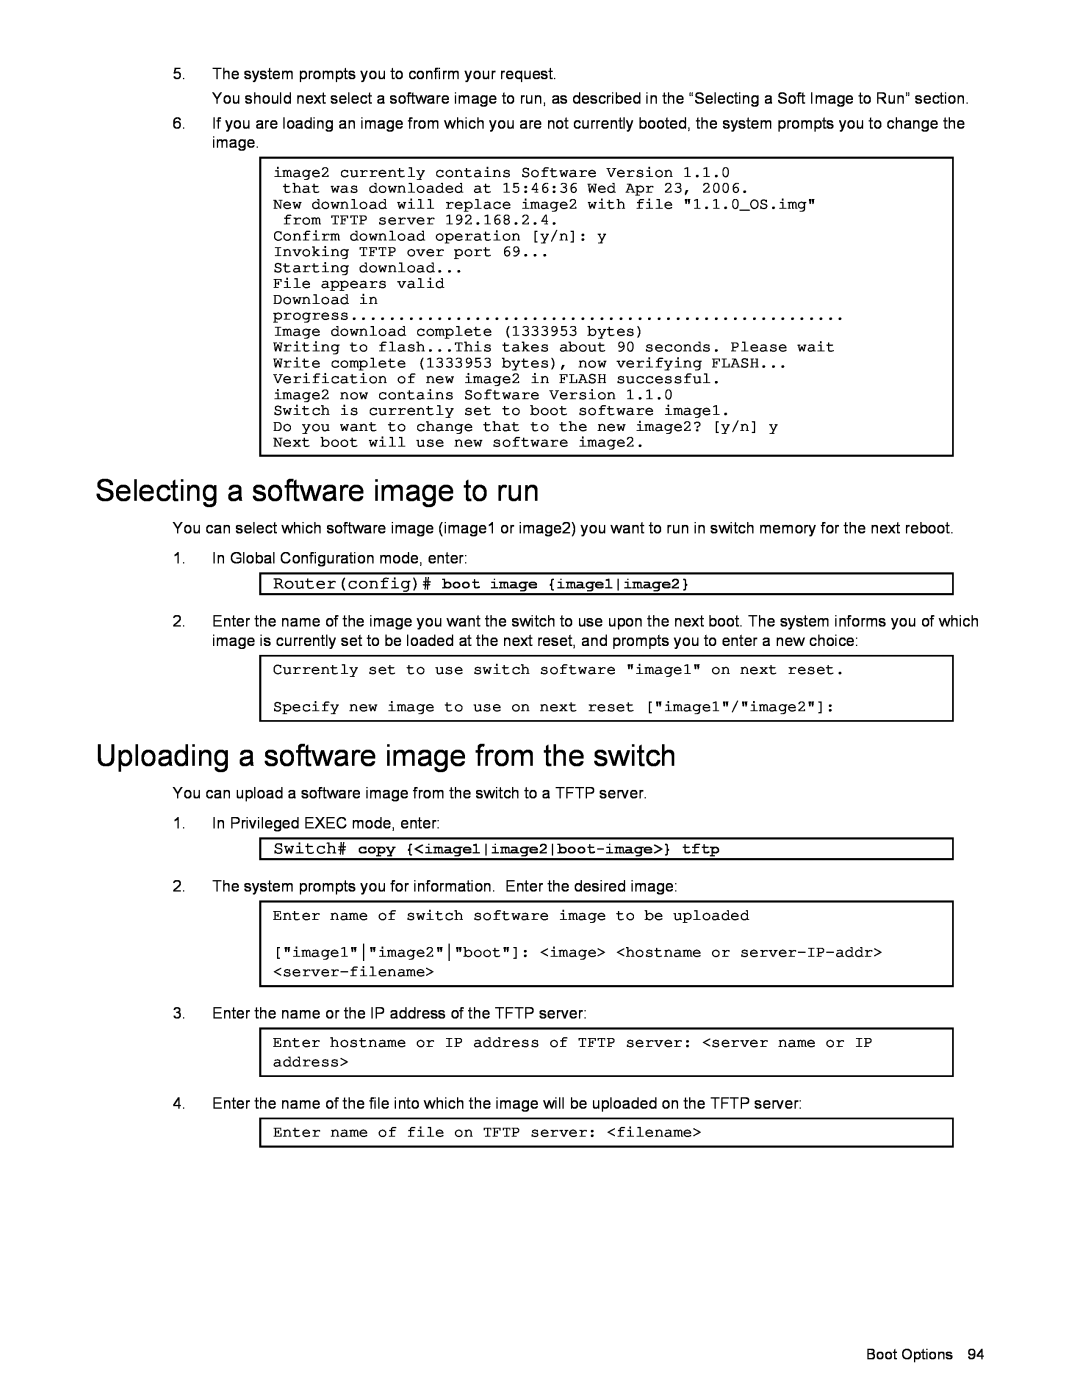 NEC N8406-022 manual Selecting a software image to run, Uploading a software image from the switch 